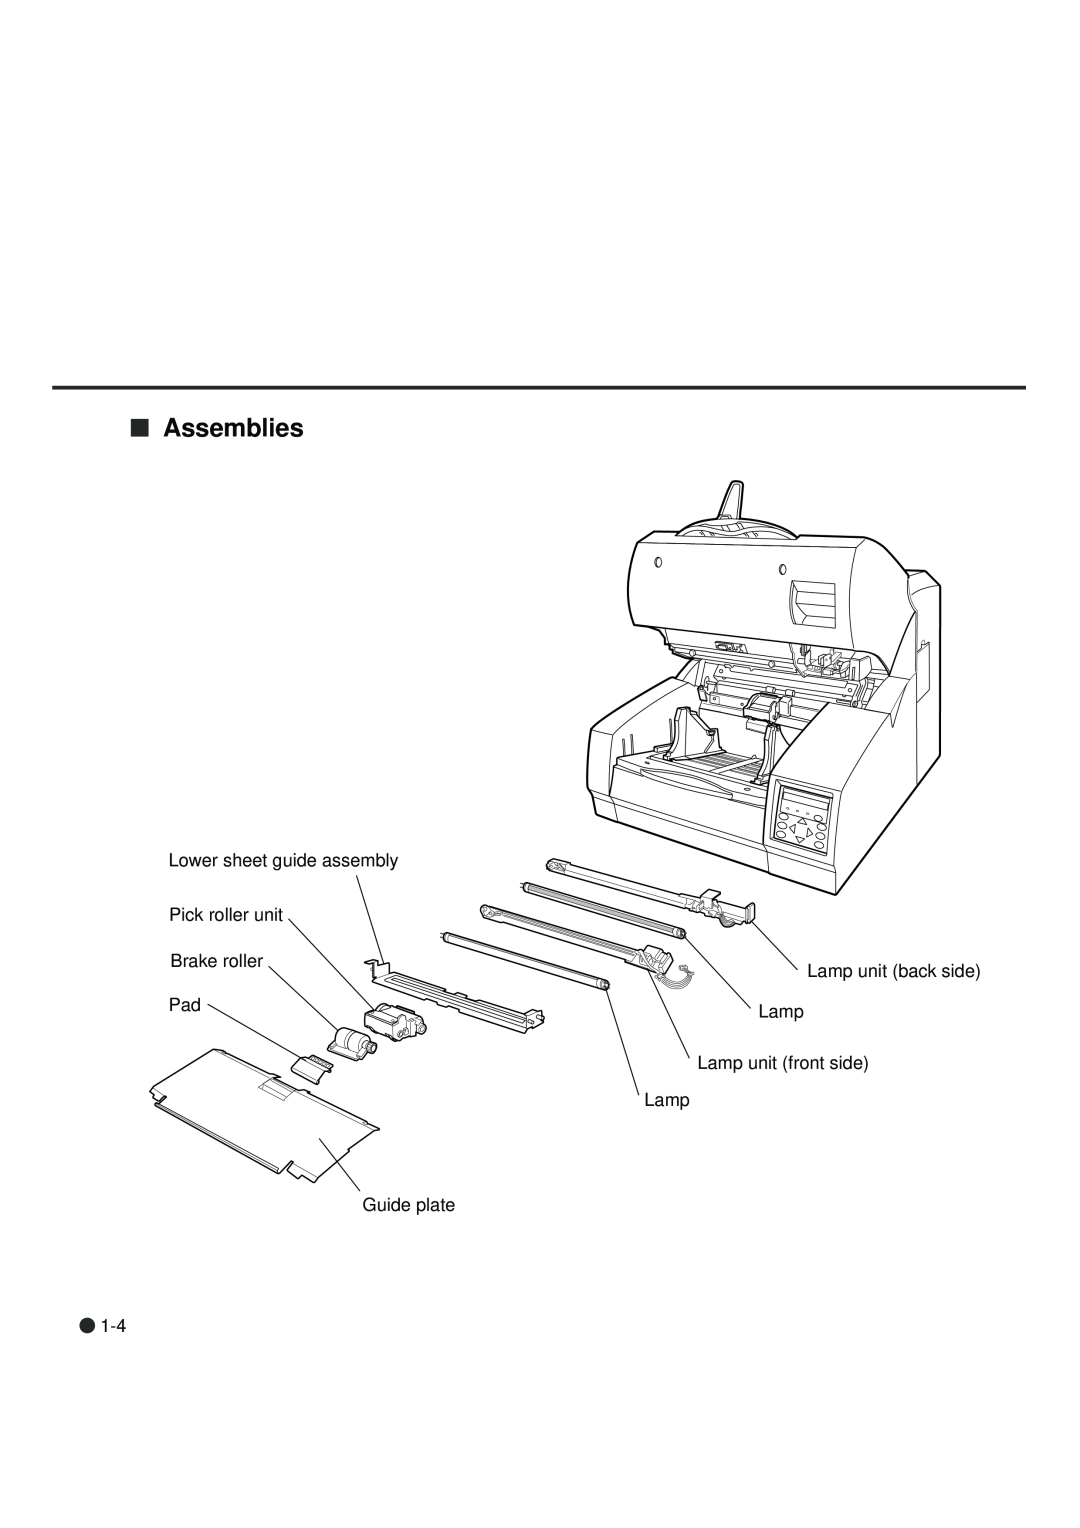 Fujitsu fi-4990C Assemblies, Lower sheet guide assembly Pick roller unit Brake roller, Lamp unit back side, Guide plate 